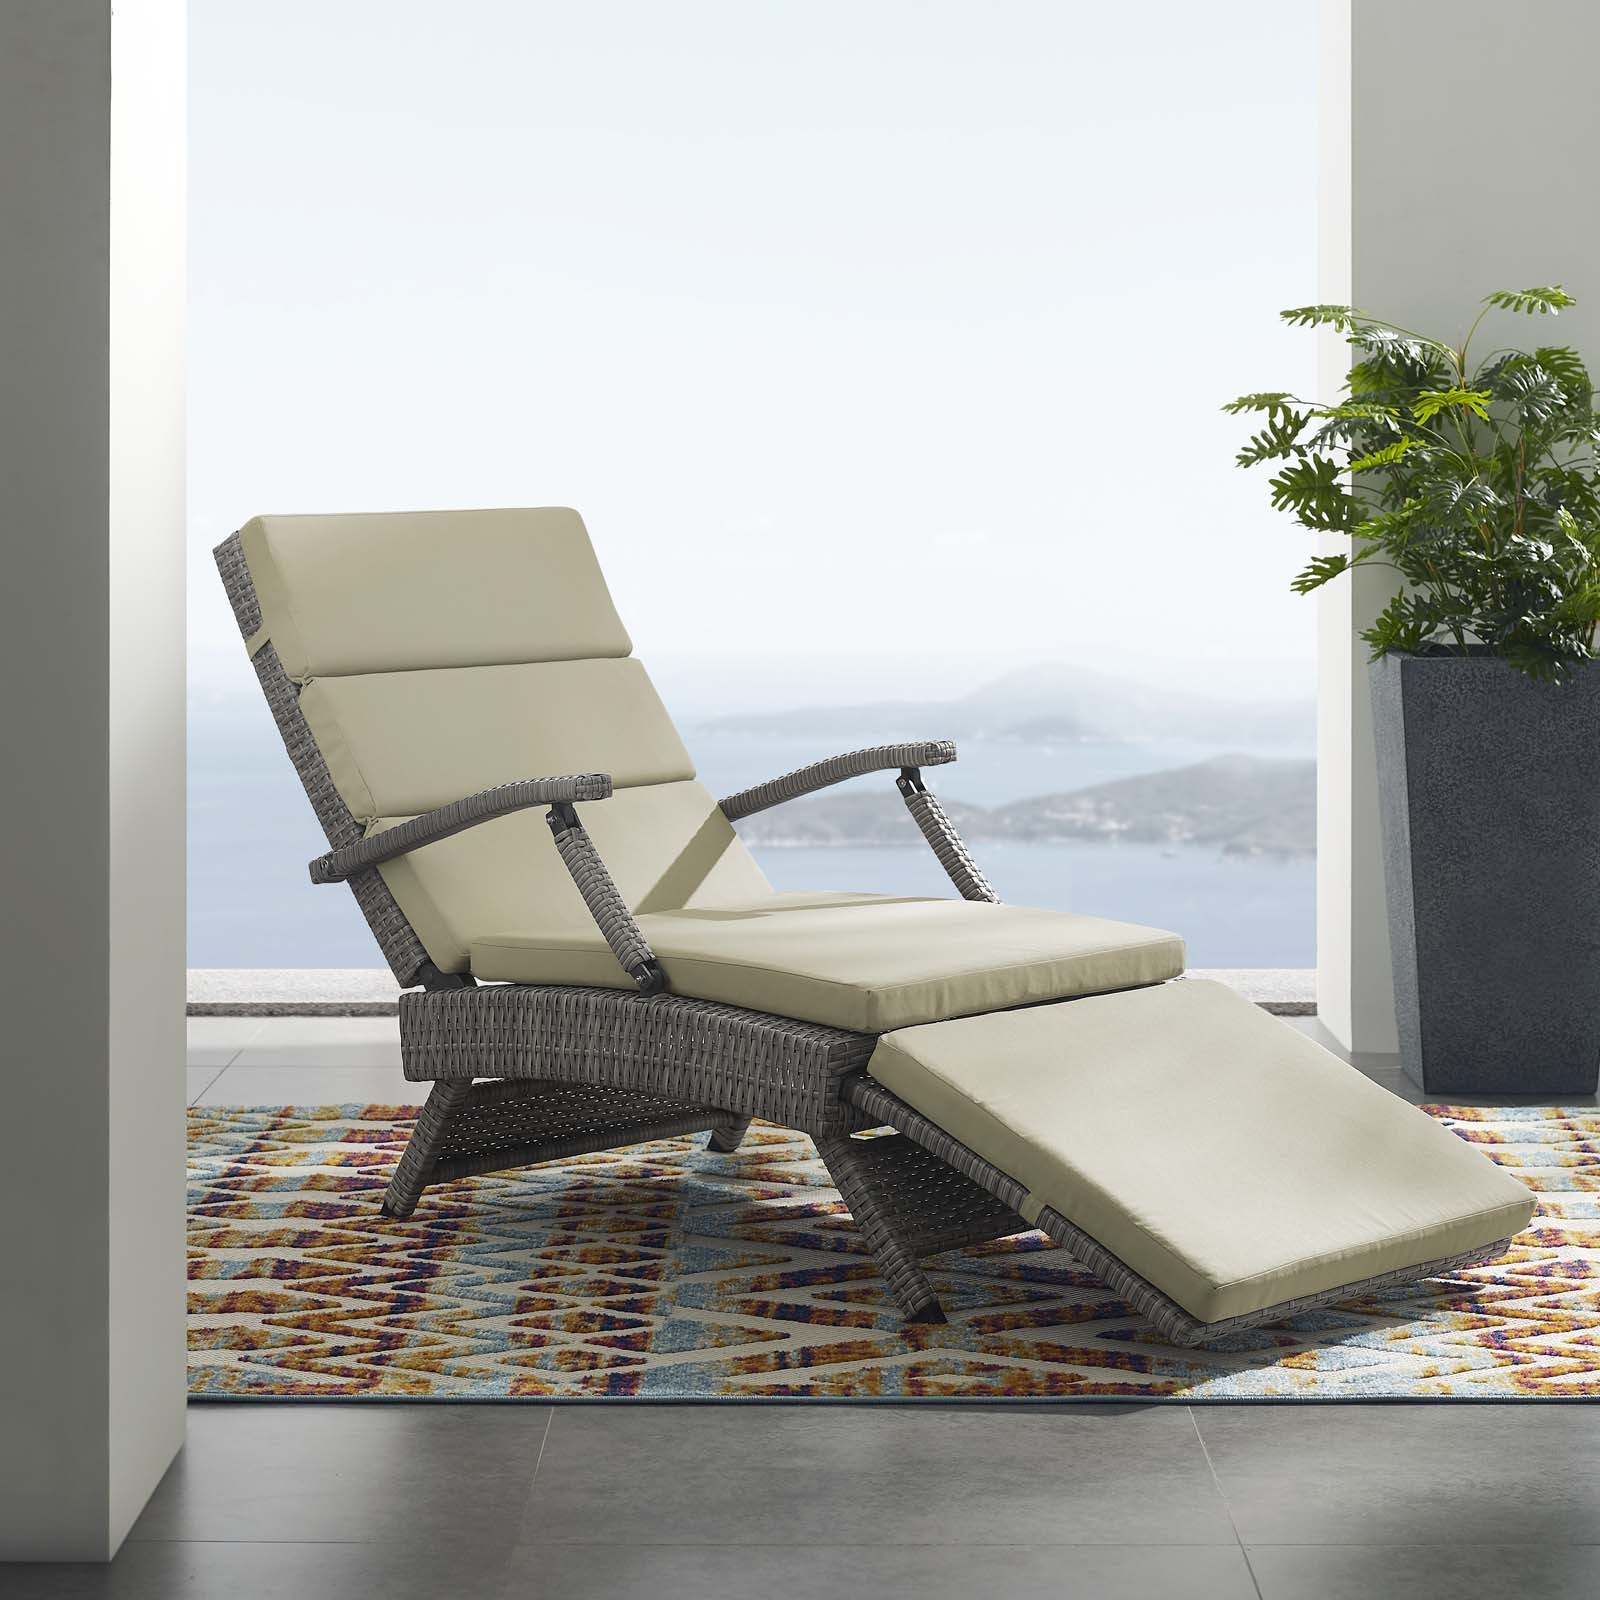 Envisage Light Gray Beige Chaise Outdoor Patio Wicker Rattan Lounge